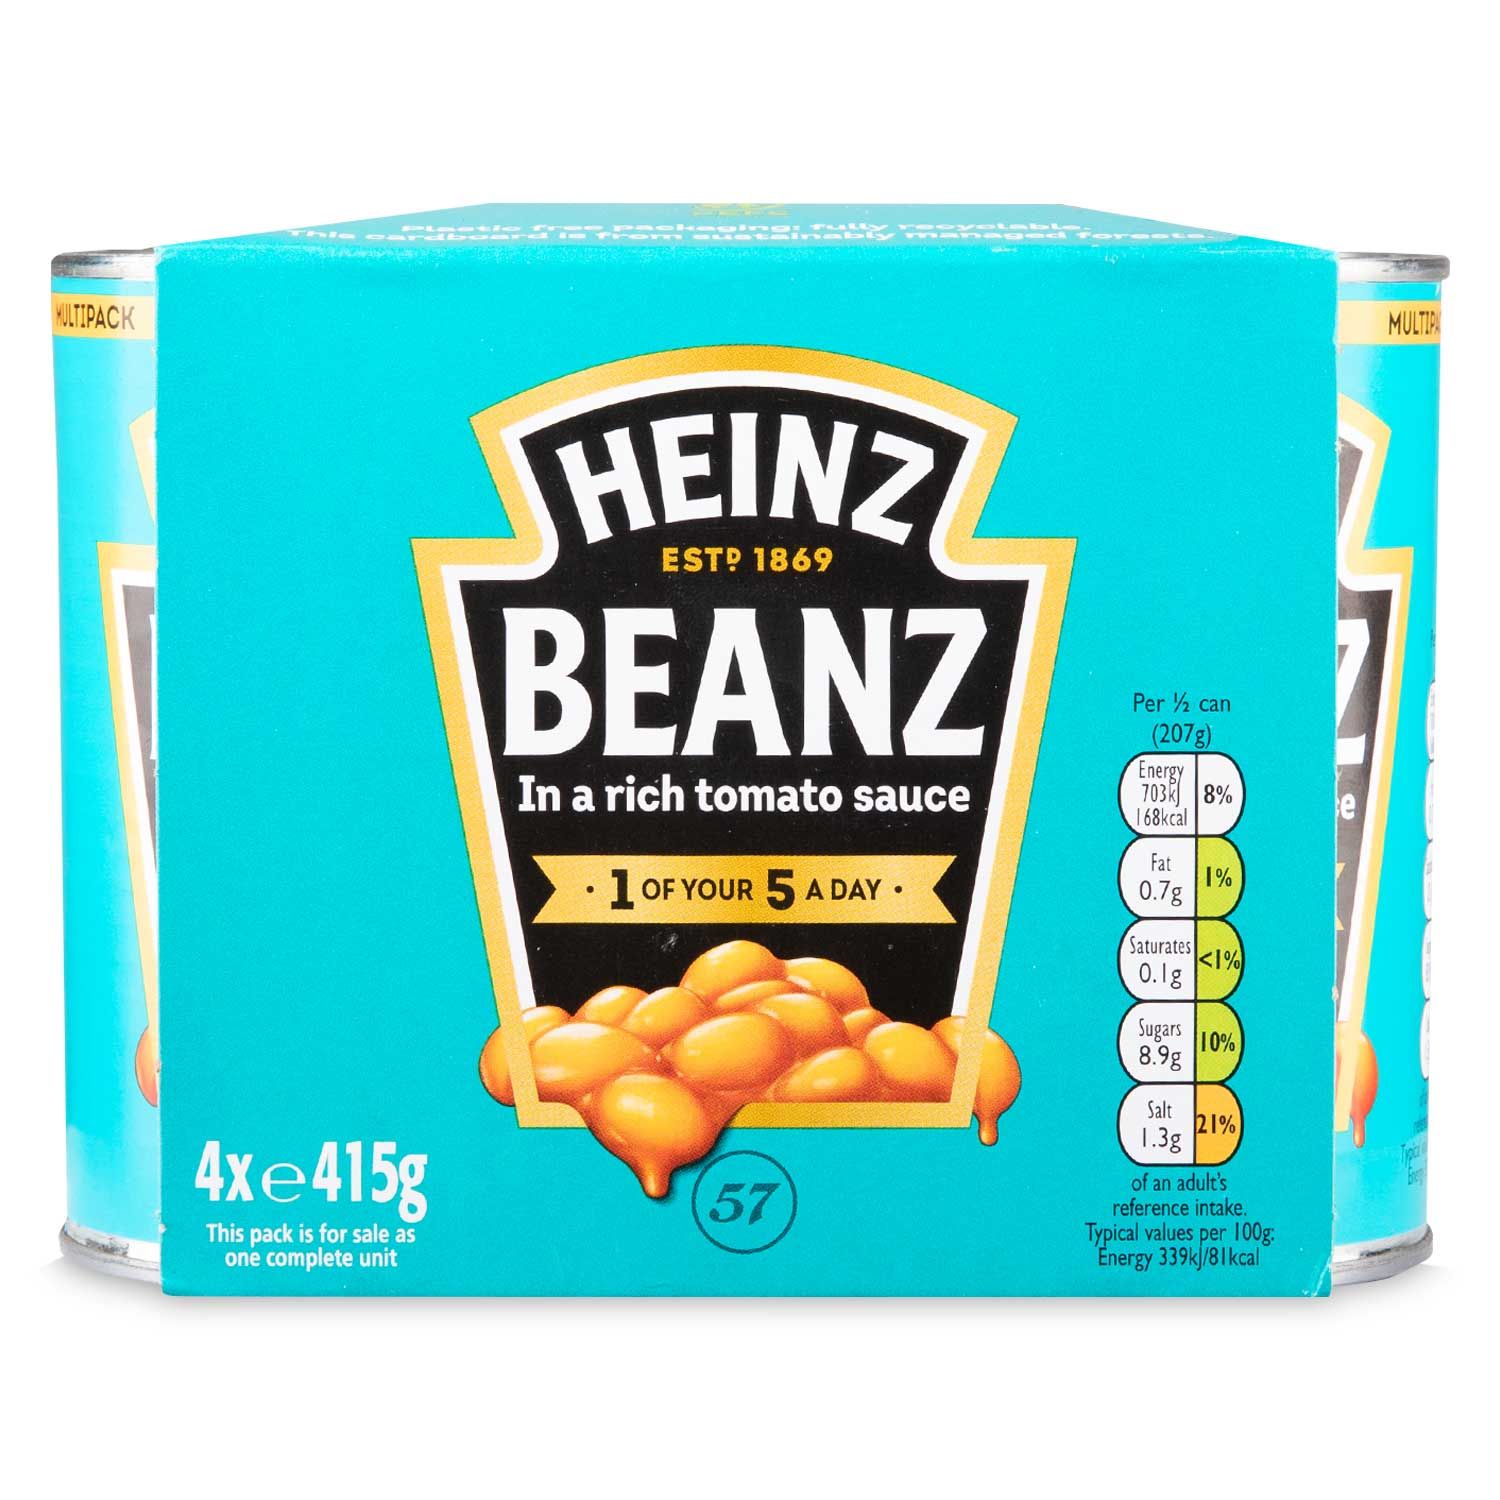 Heinz Beanz 4x415g @SaveCo Online Ltd